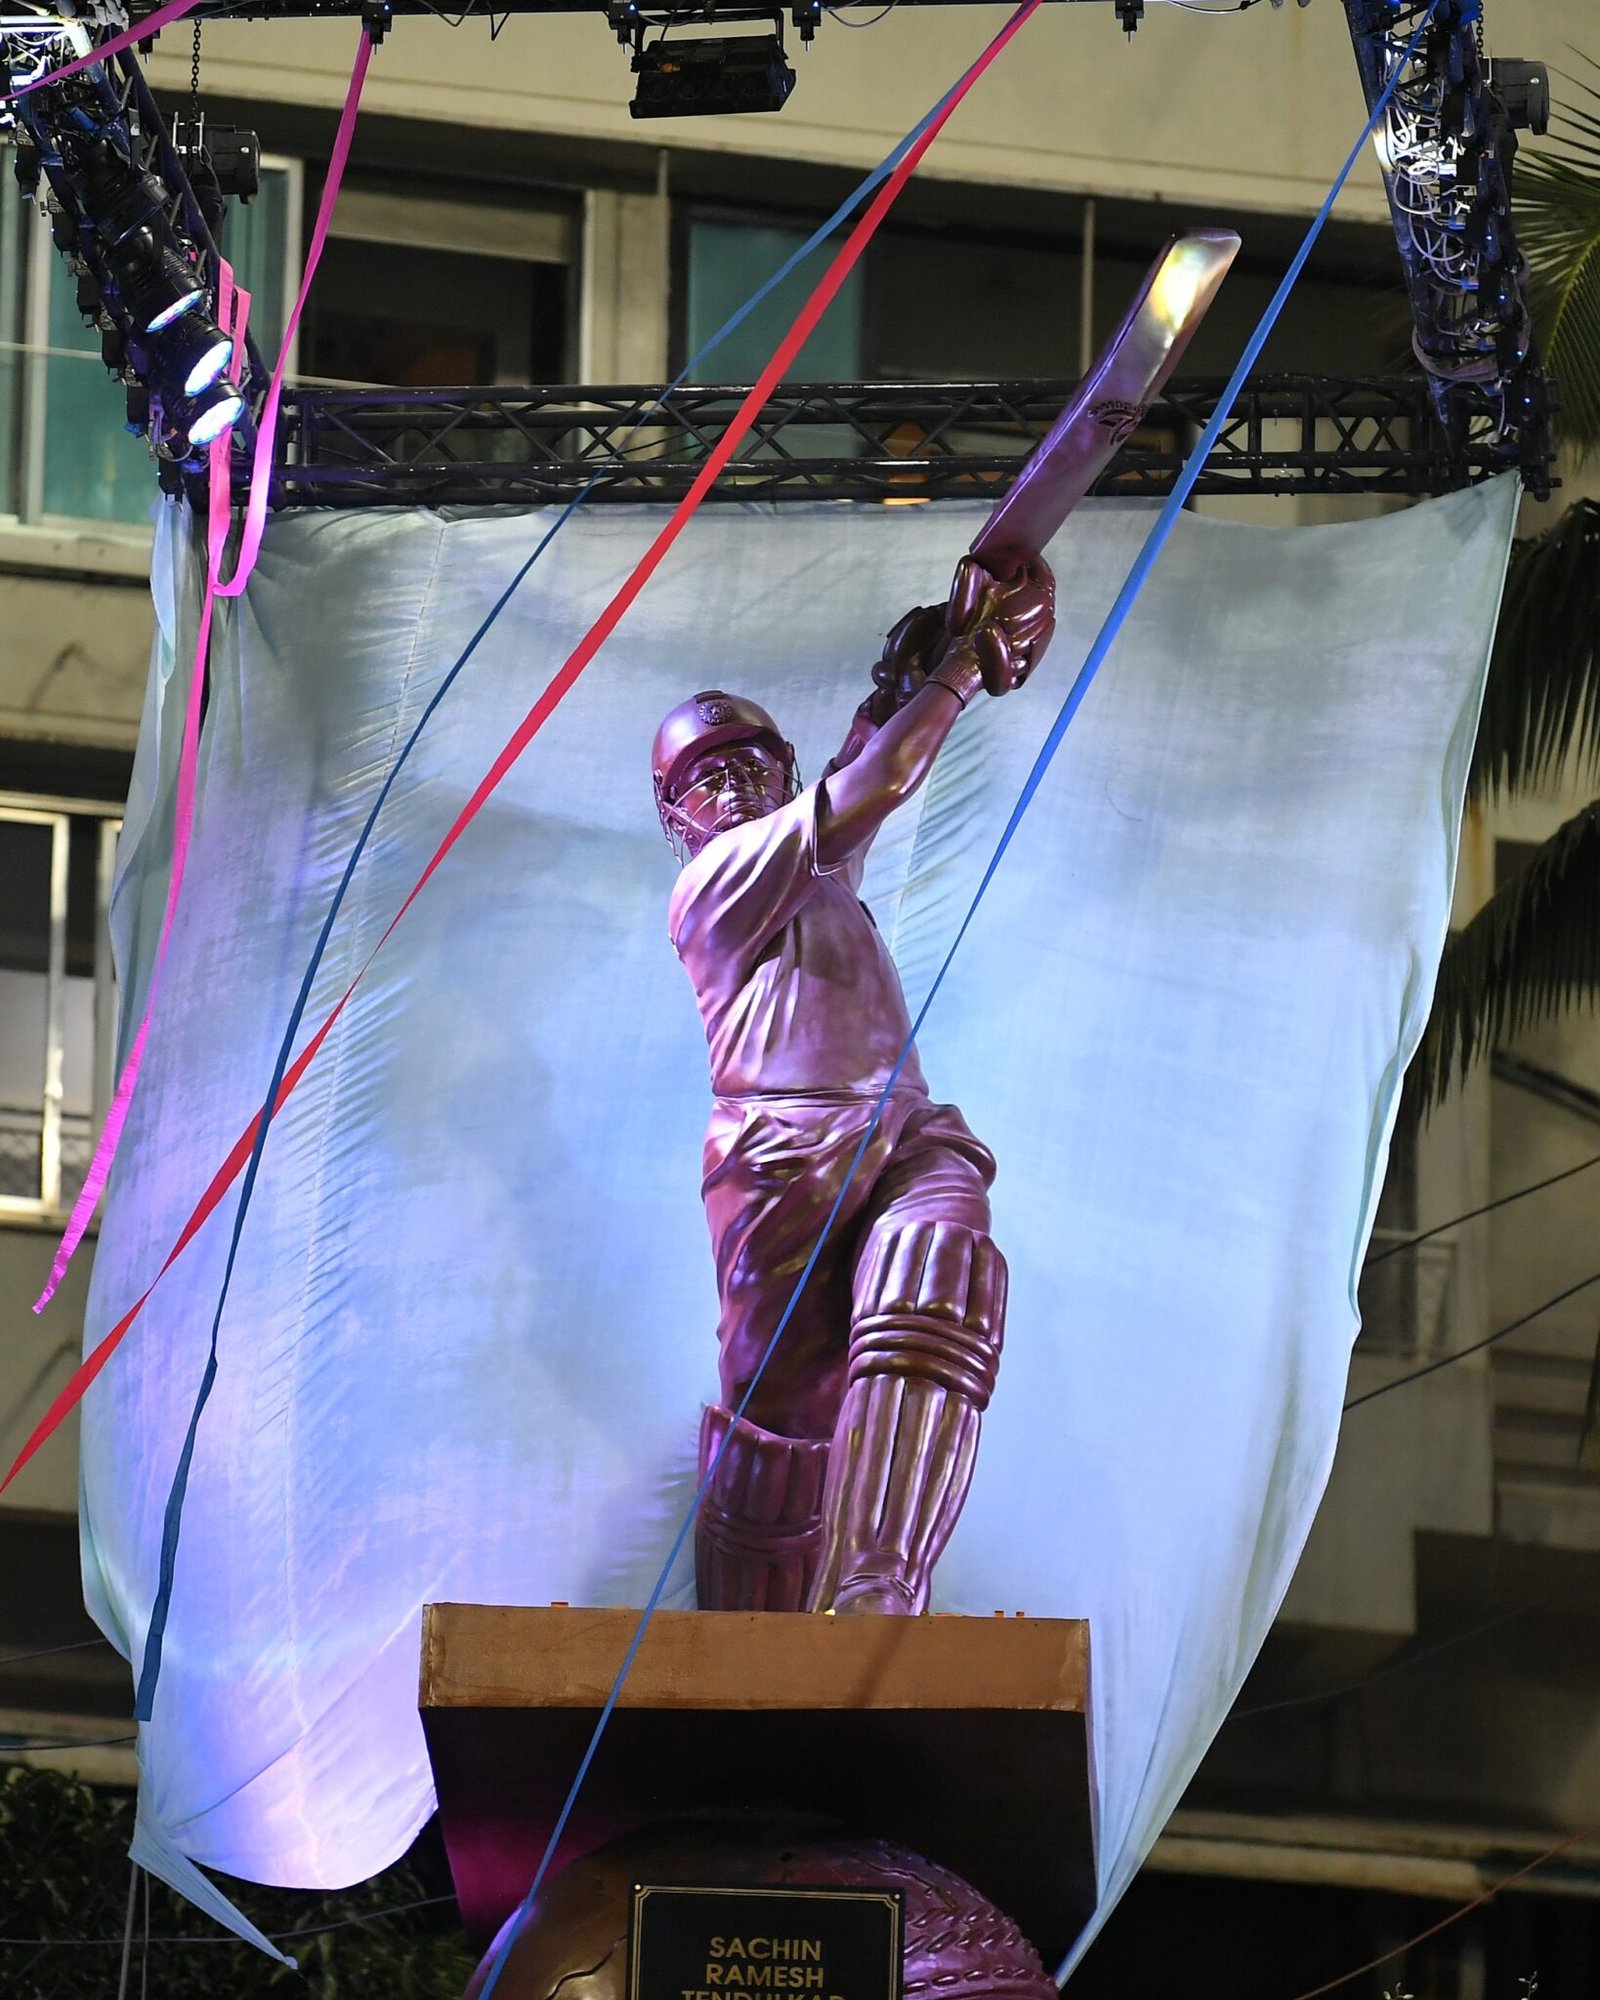 Sachin Tendulkar statue (pic credit ICC "X")